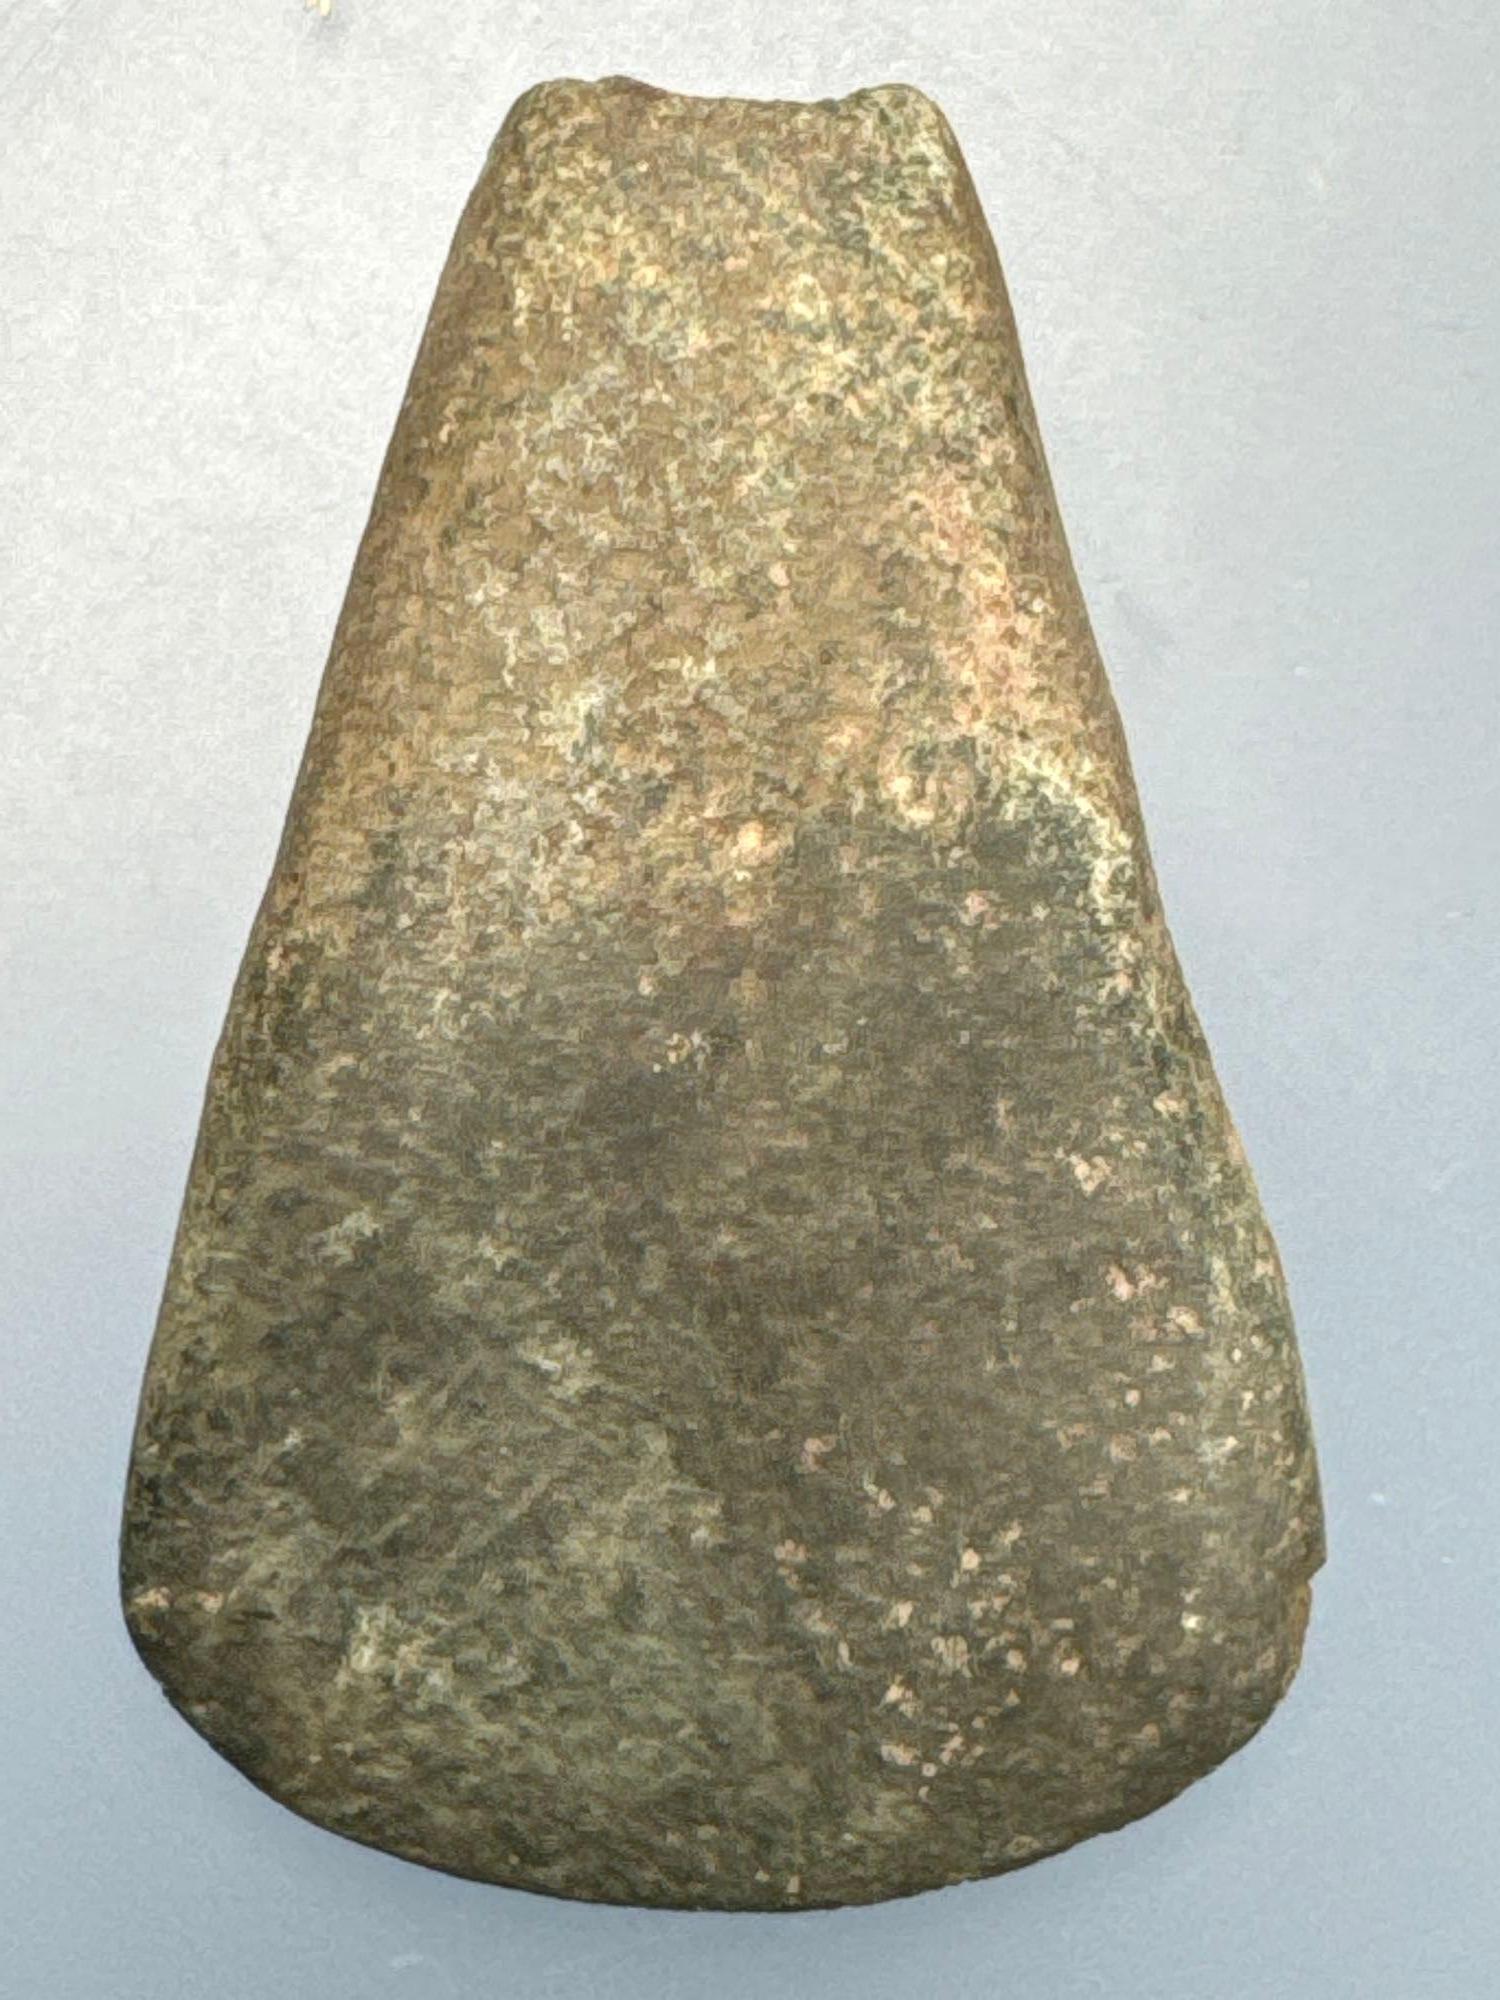 2 3/4" Miniature Flared Bit Celt, Found in Missouri, Nice Example, Ex: Walt Podpora Collection